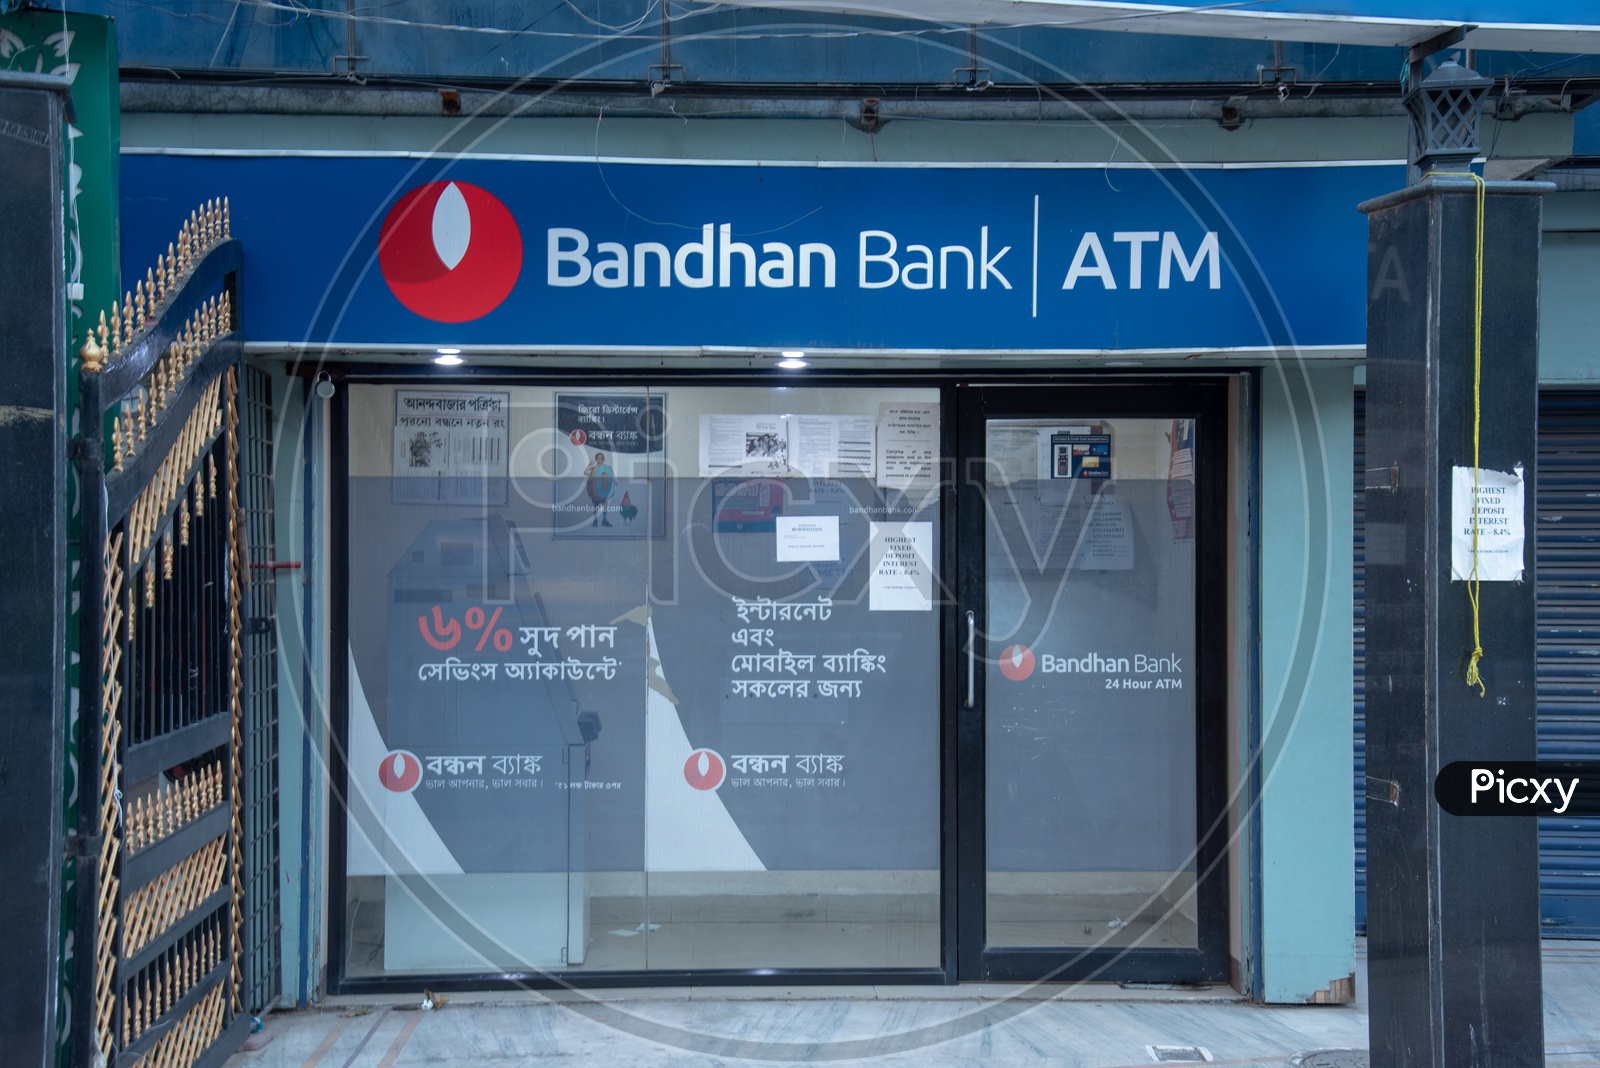 Bandhan Bank ATM Centre